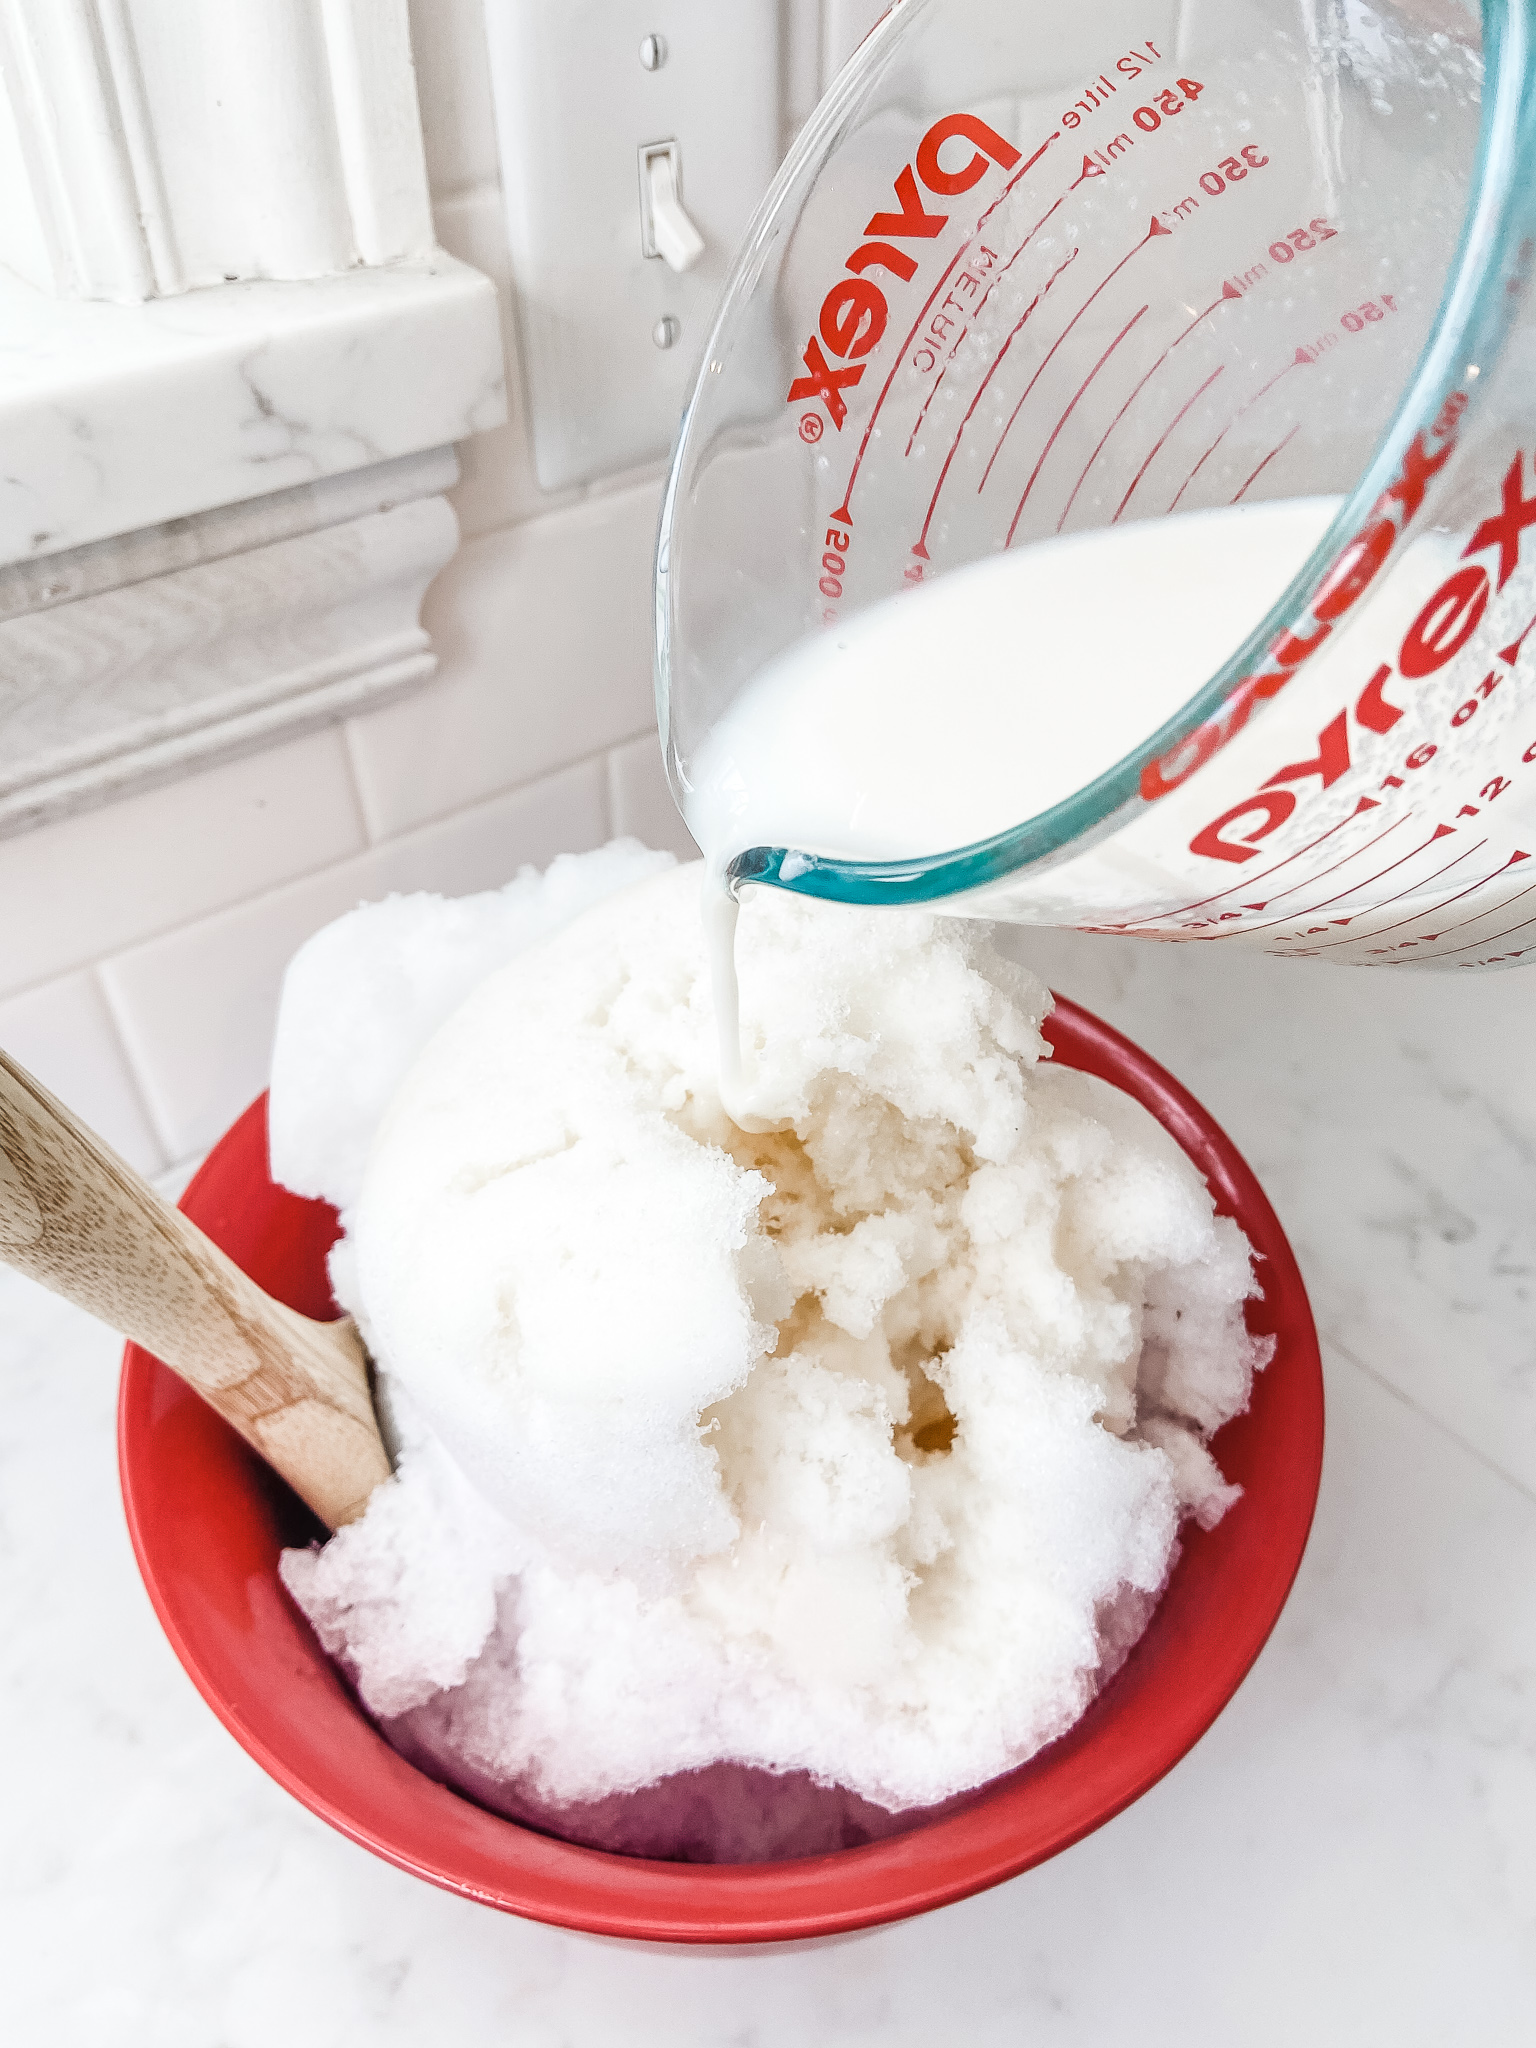 How To make snow ice cream